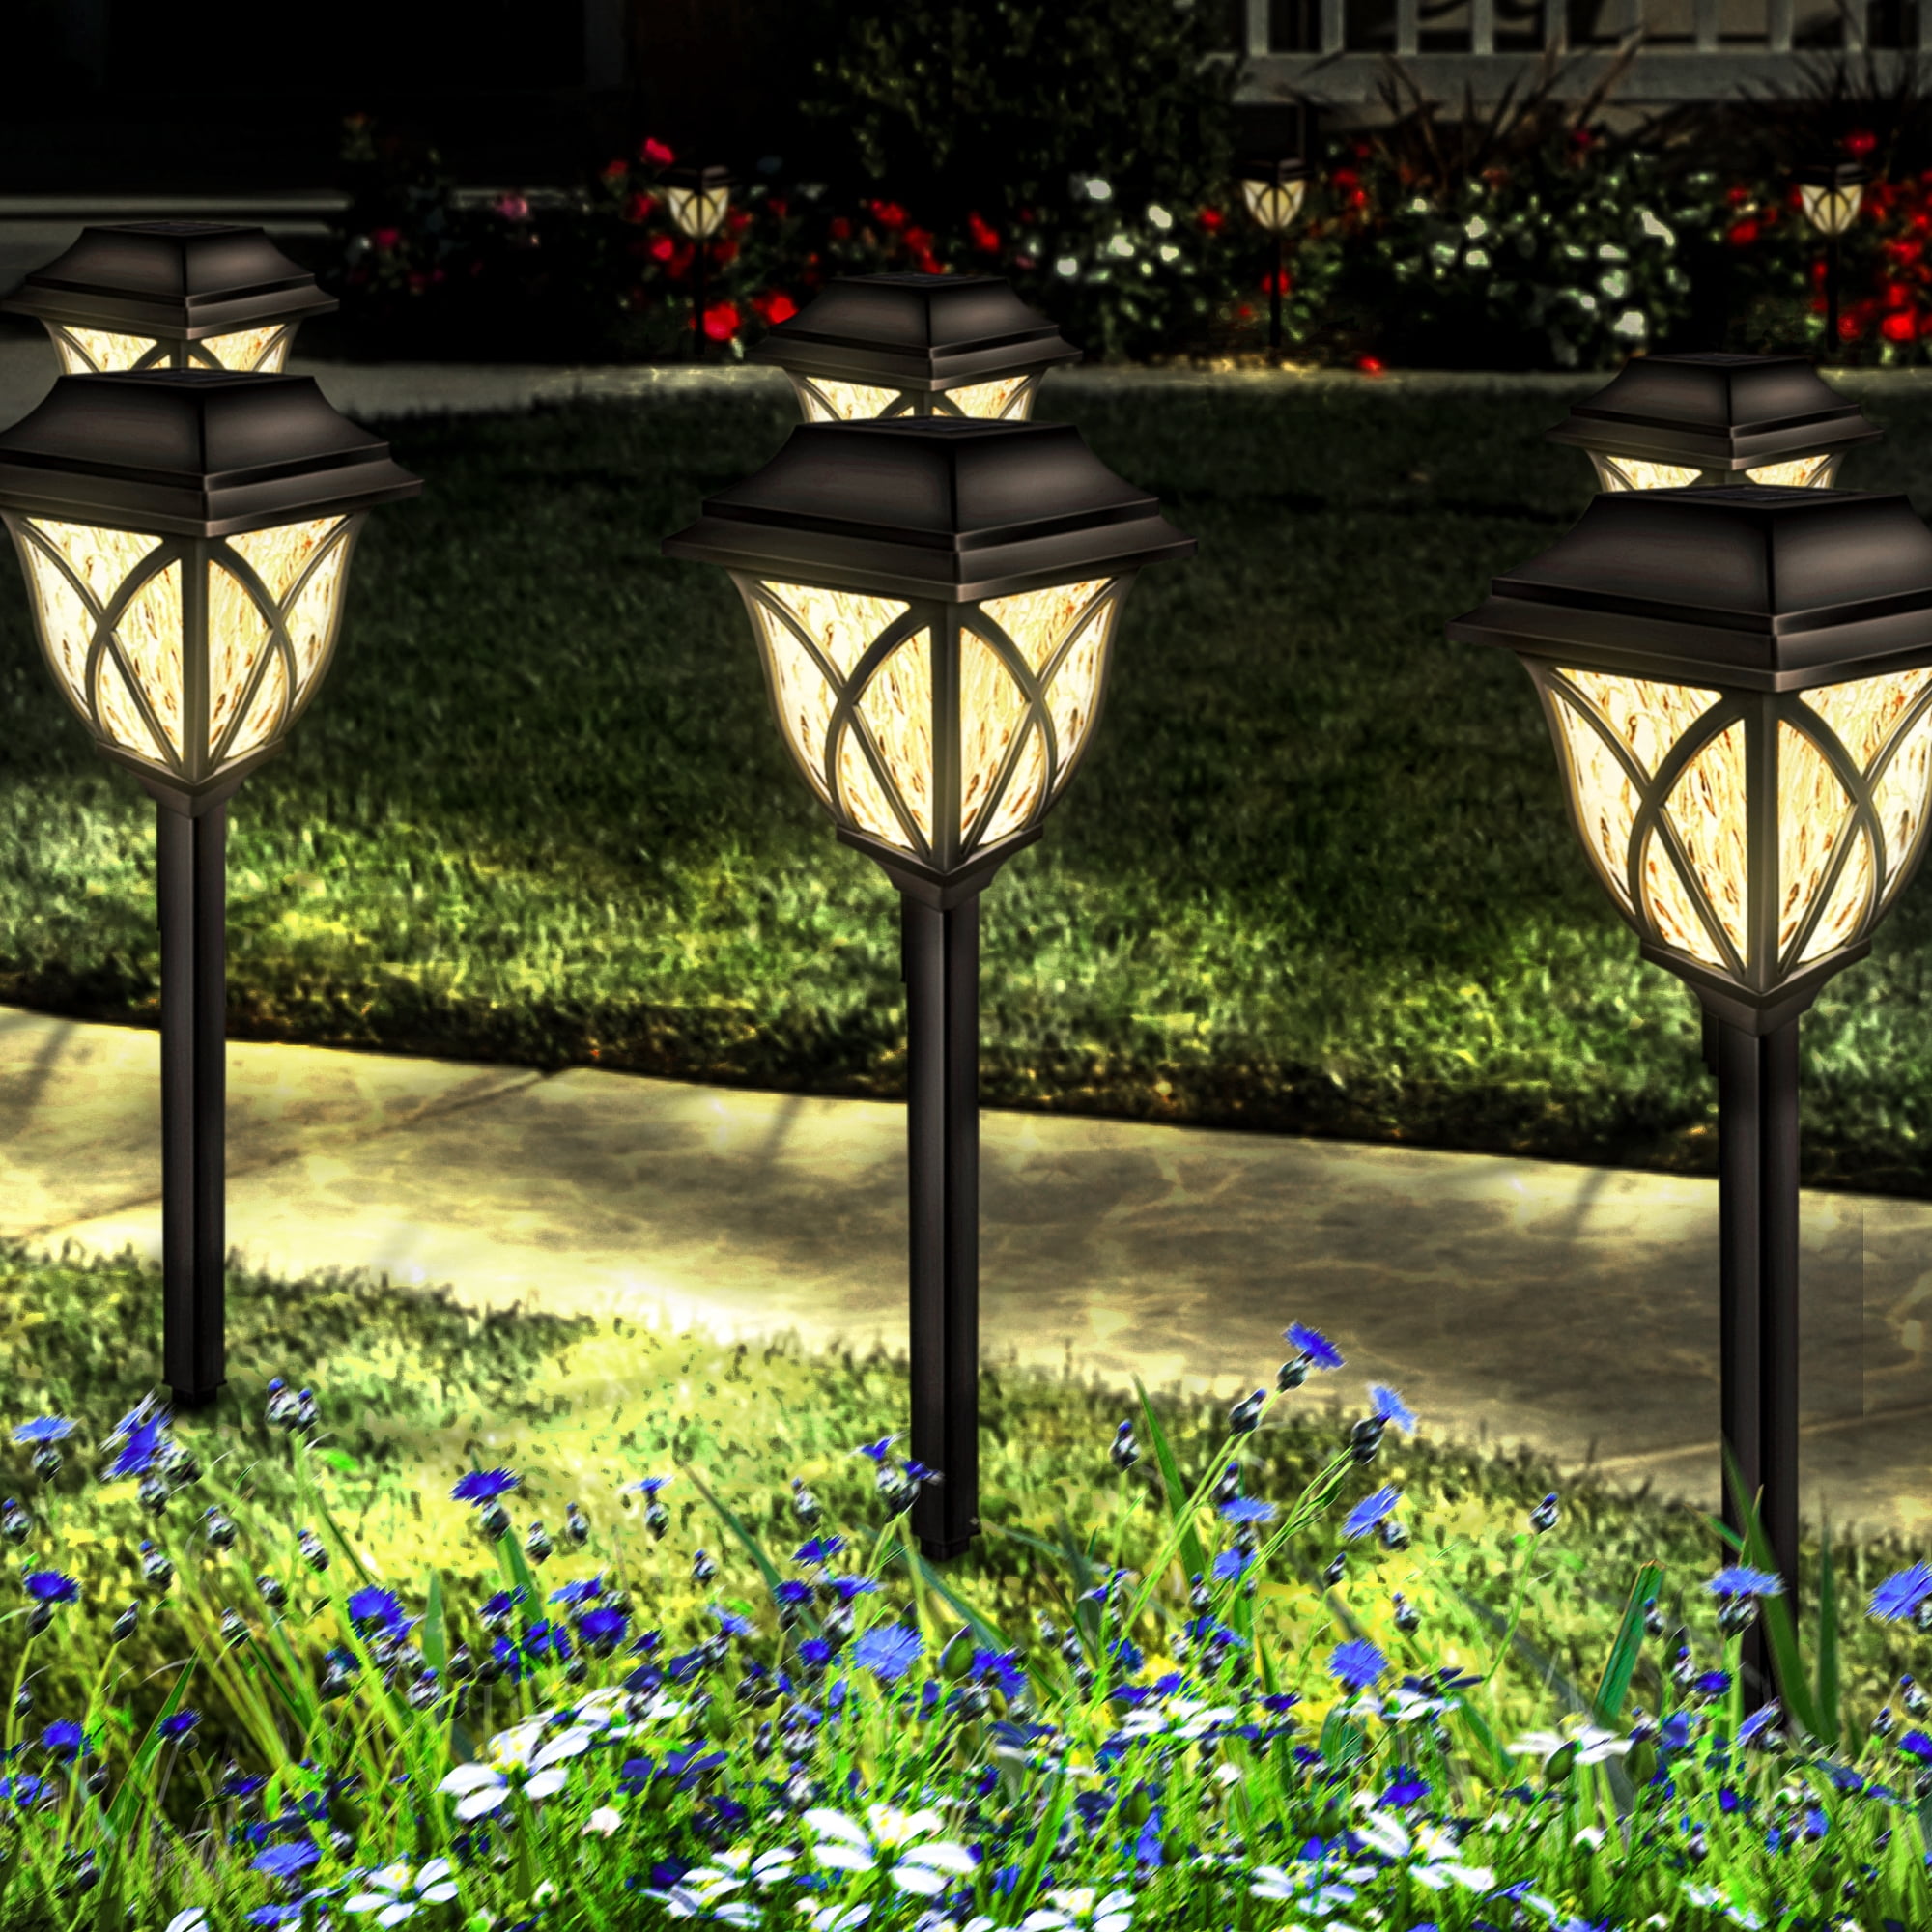 Details about   10/24PCS Garden LED Lights Outdoor Lawn Solar Landscape Pathway Yard Lamp 7Color 